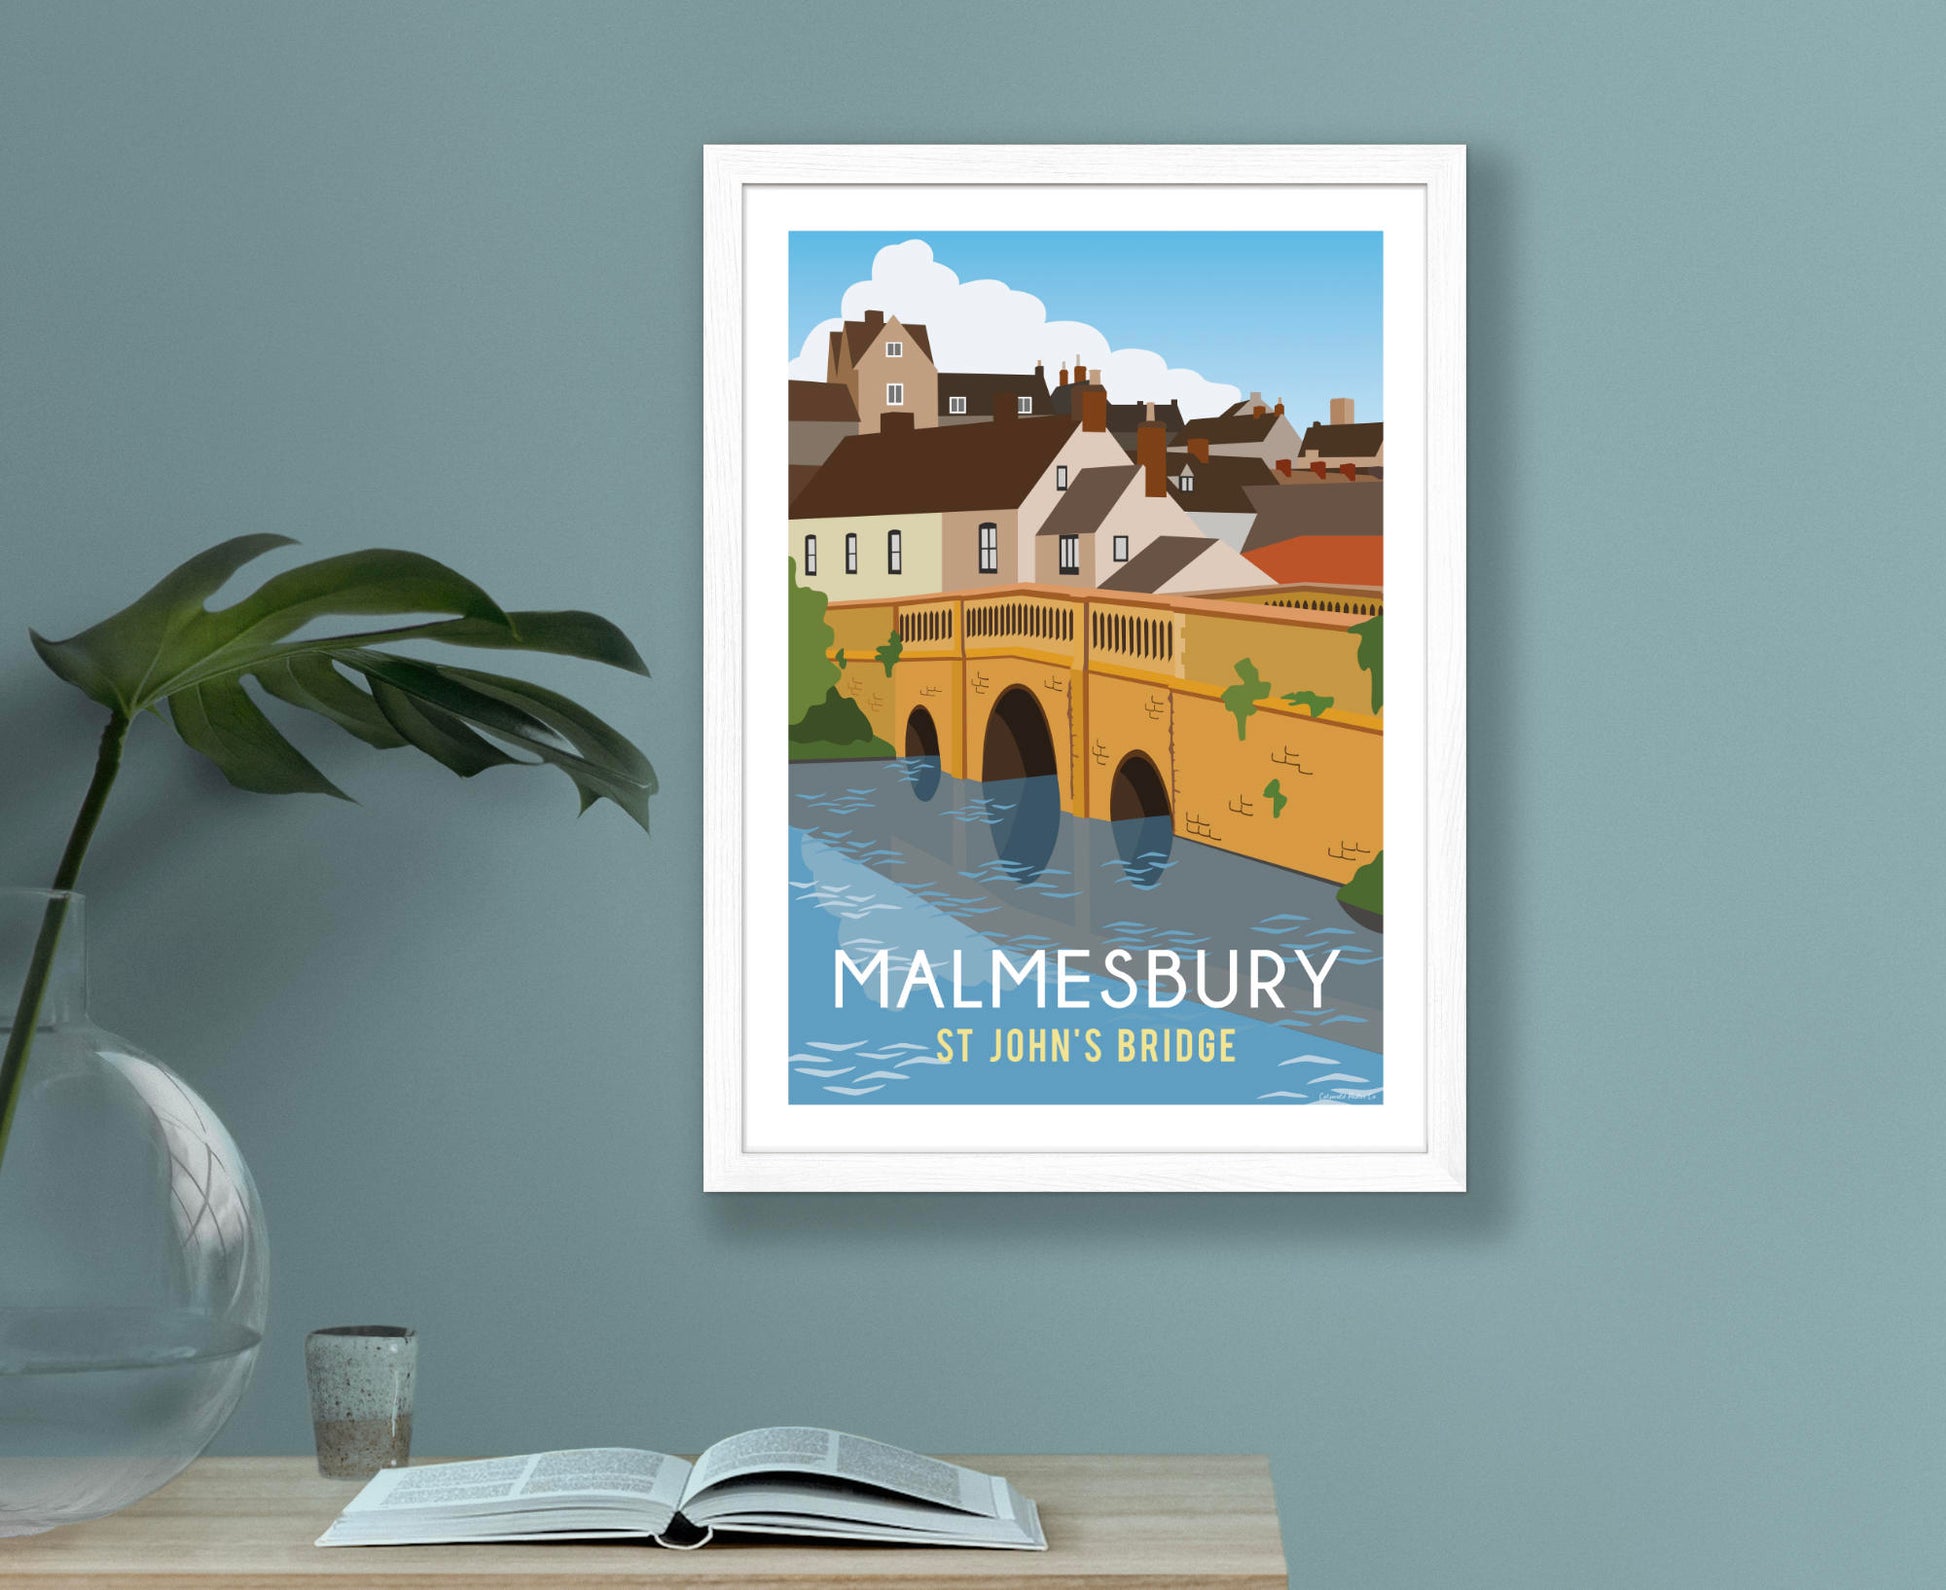 Malmesbury St John's Bridge Poster in white frame